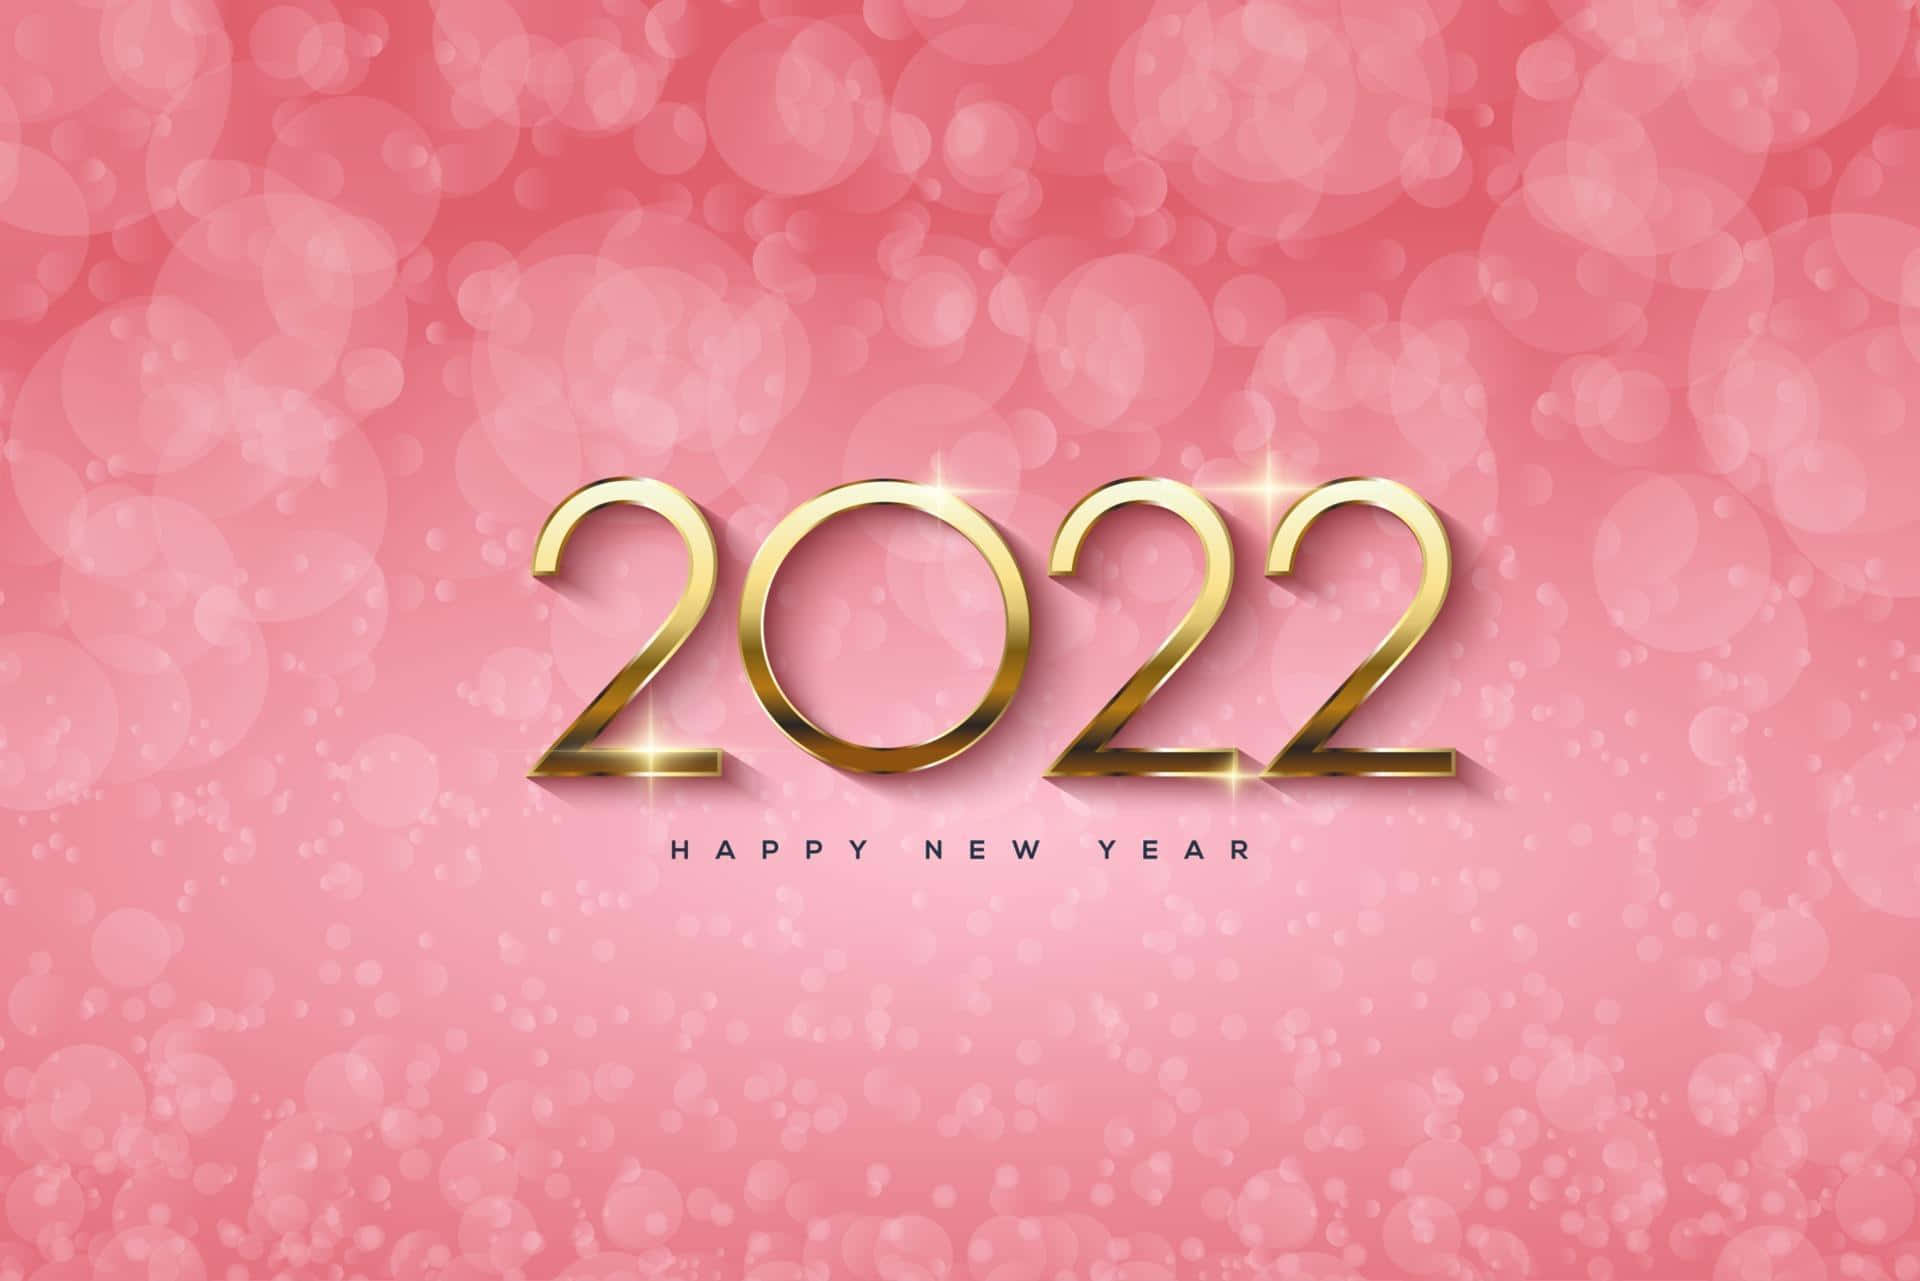 Feliceanno Nuovo 2022!